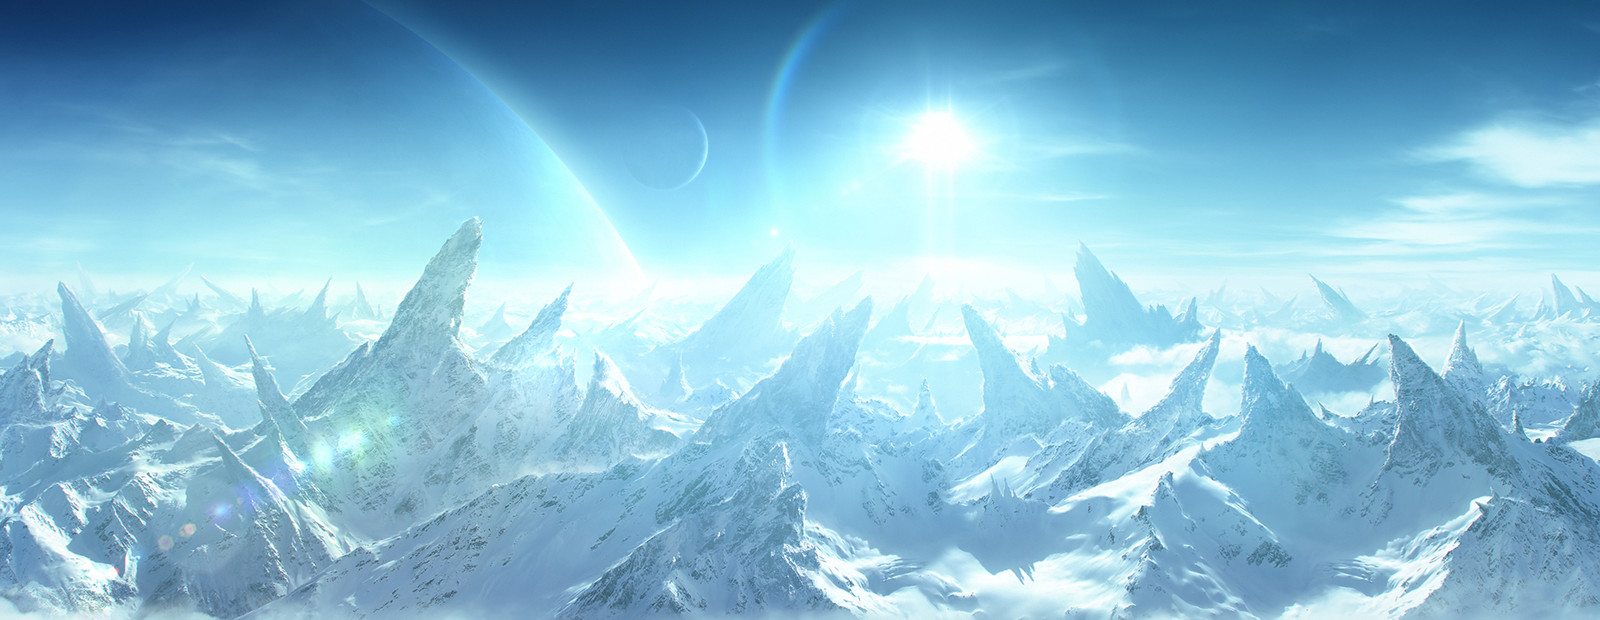 Mountains dmp video game - 2013